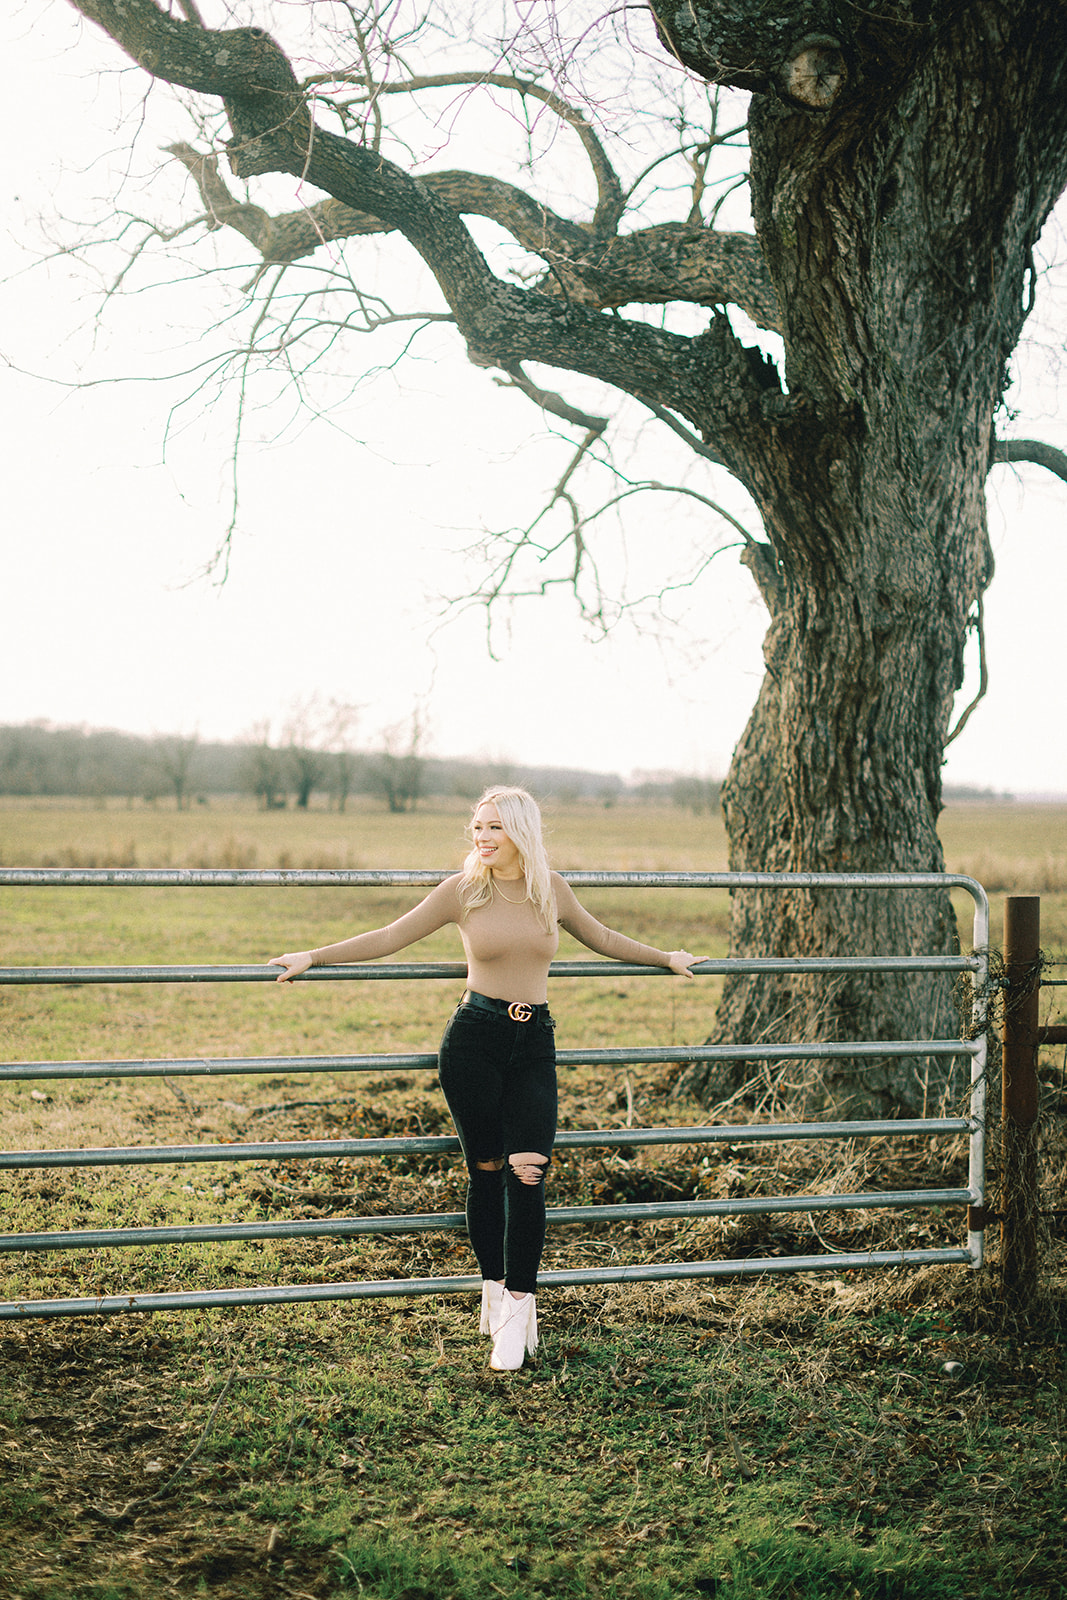 A senior girl in Texarkana poses in front of a tree and fence in Texarkana, Texas